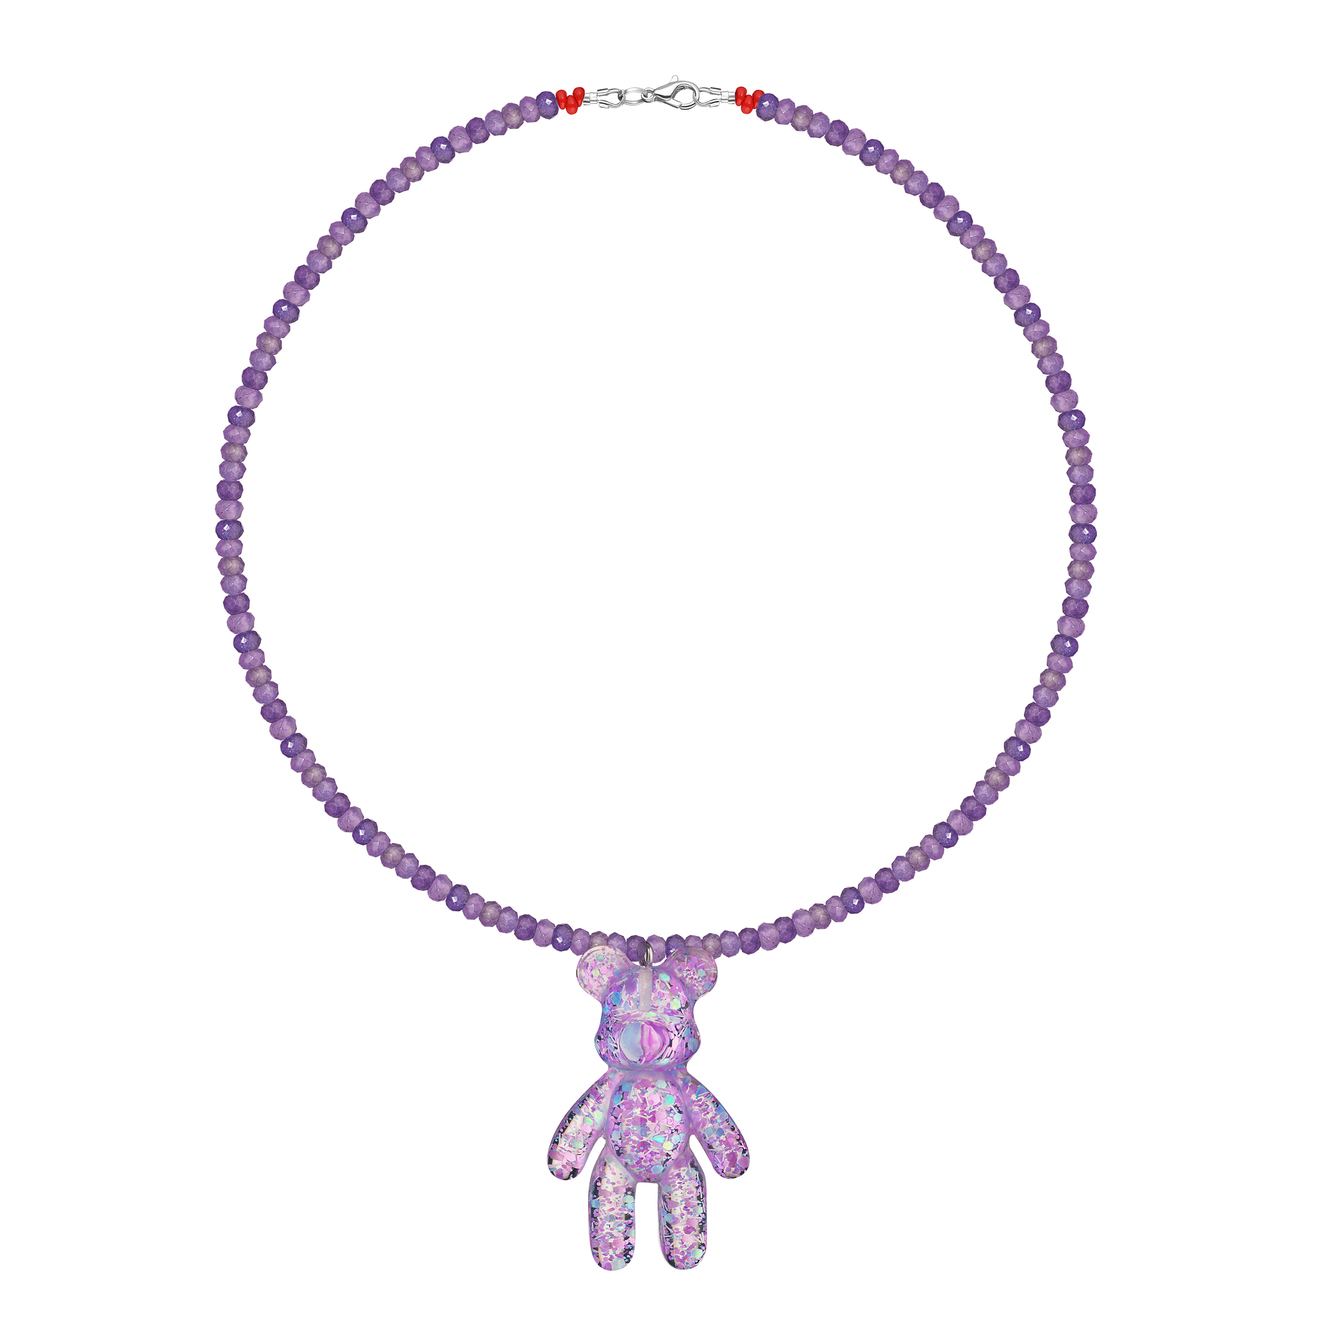 Maniovich AM Фиолетовое колье с мишкой maniovich am разноцветное колье с жемчугом rainbow necklace